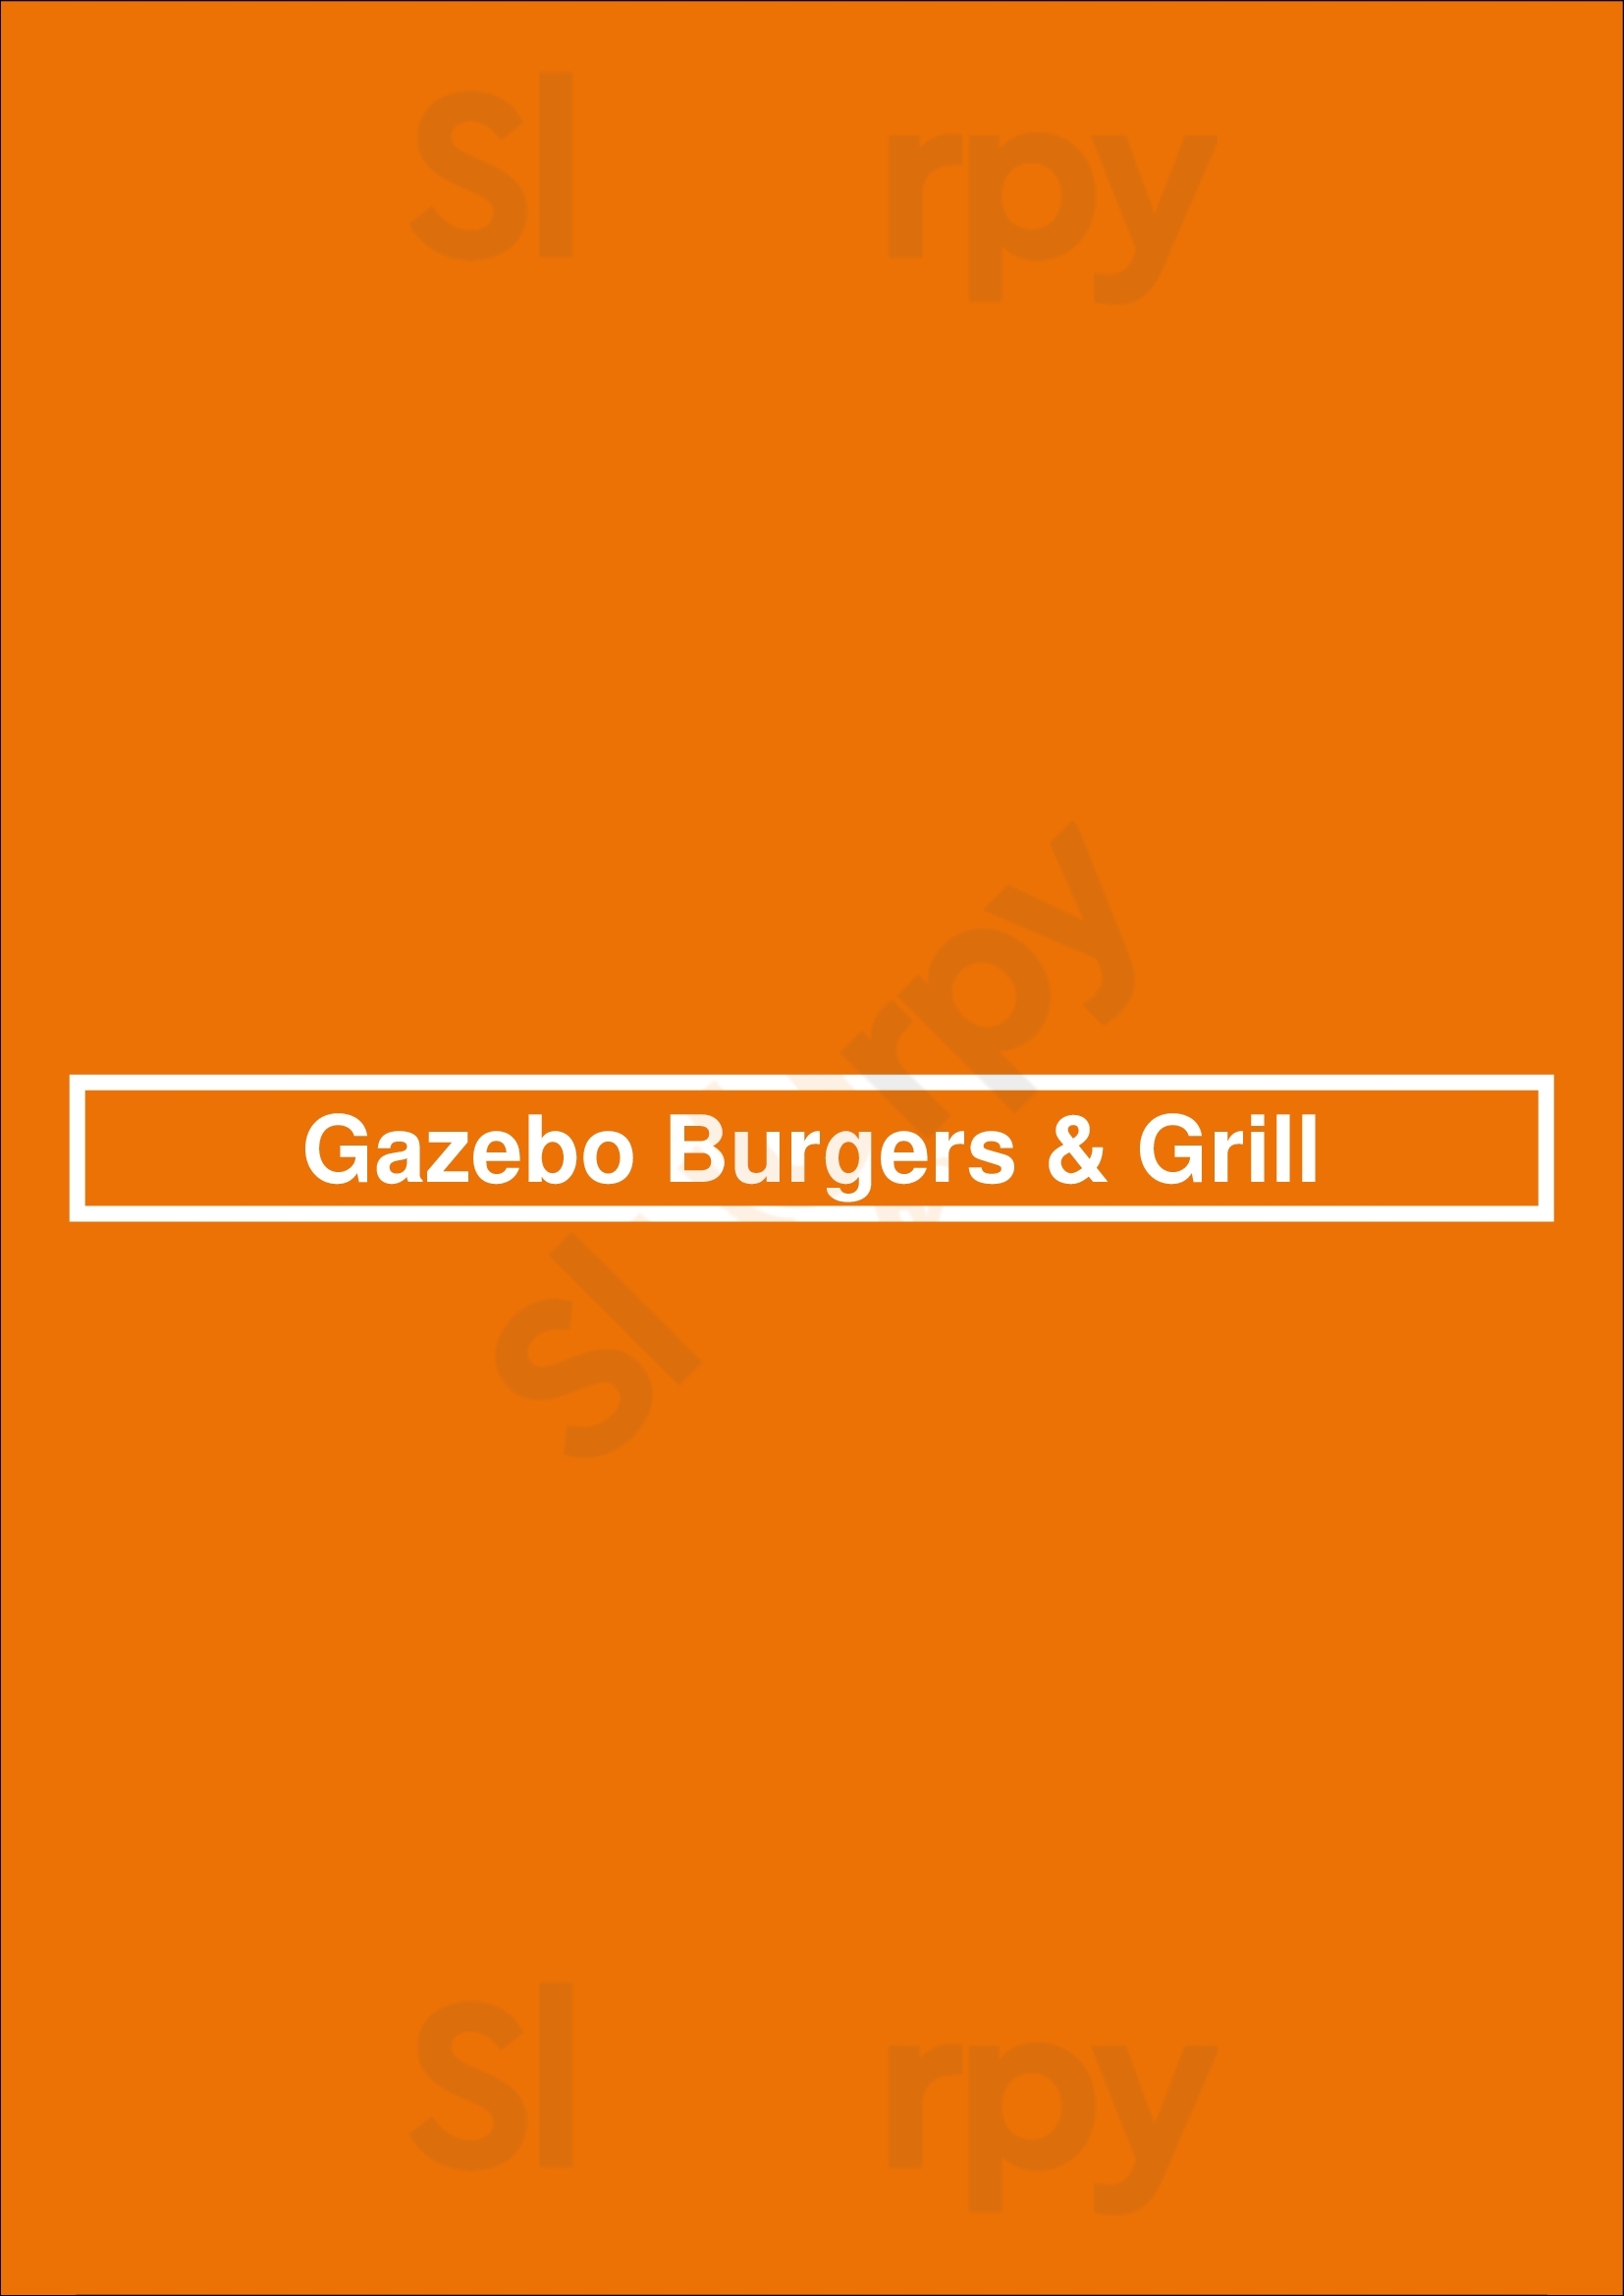 Gazebo Burgers & Grill Oakville Menu - 1